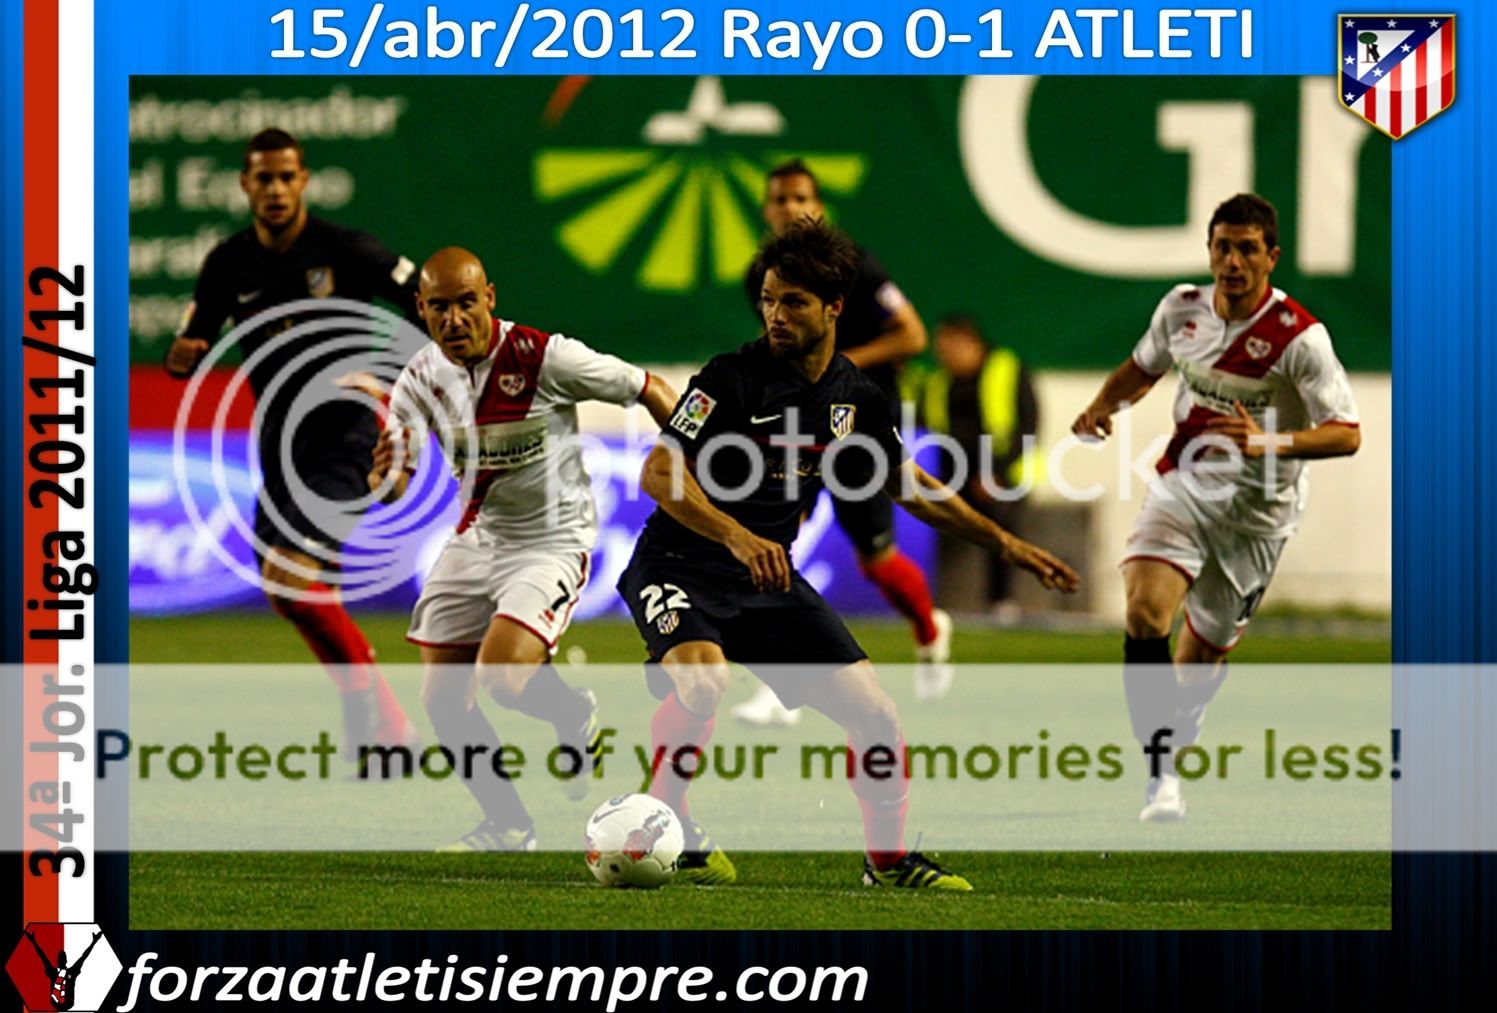 34ª Jor. Liga 2011/12 Rayo 0-1 ATLETI.- Falcao no perdona ni media 015Copiar-8